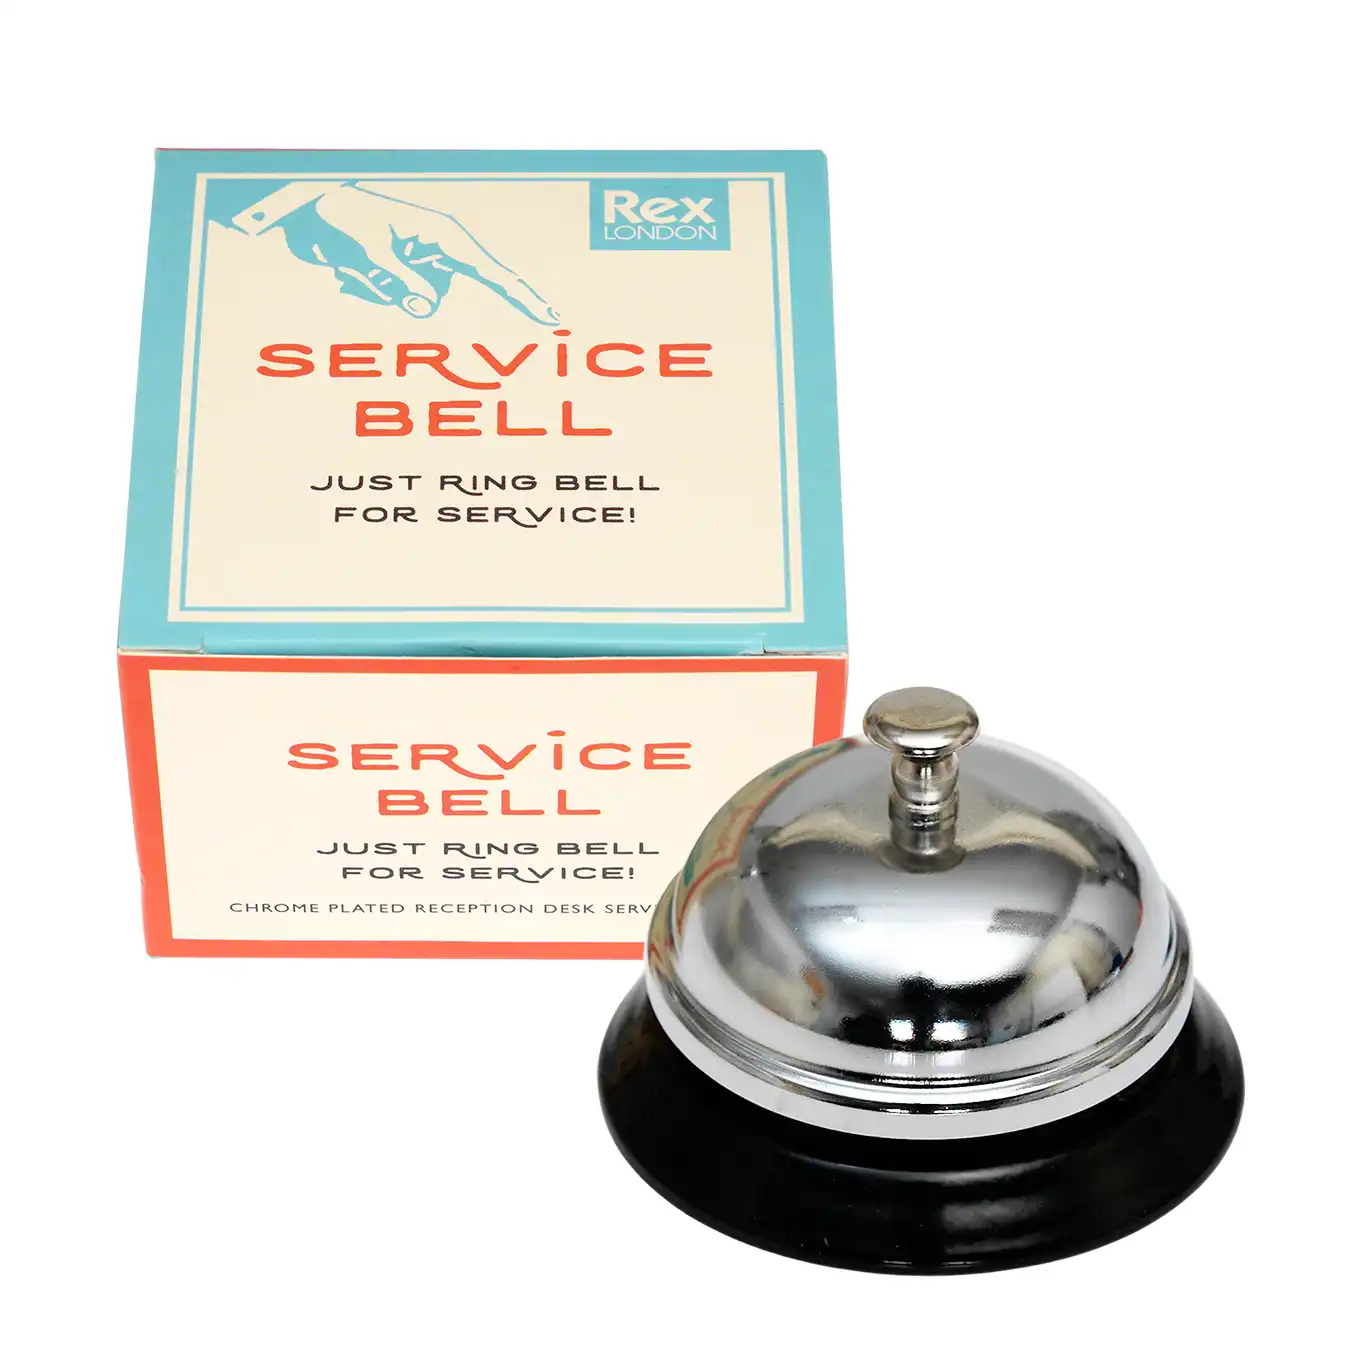 classic service bell in a retro-style box